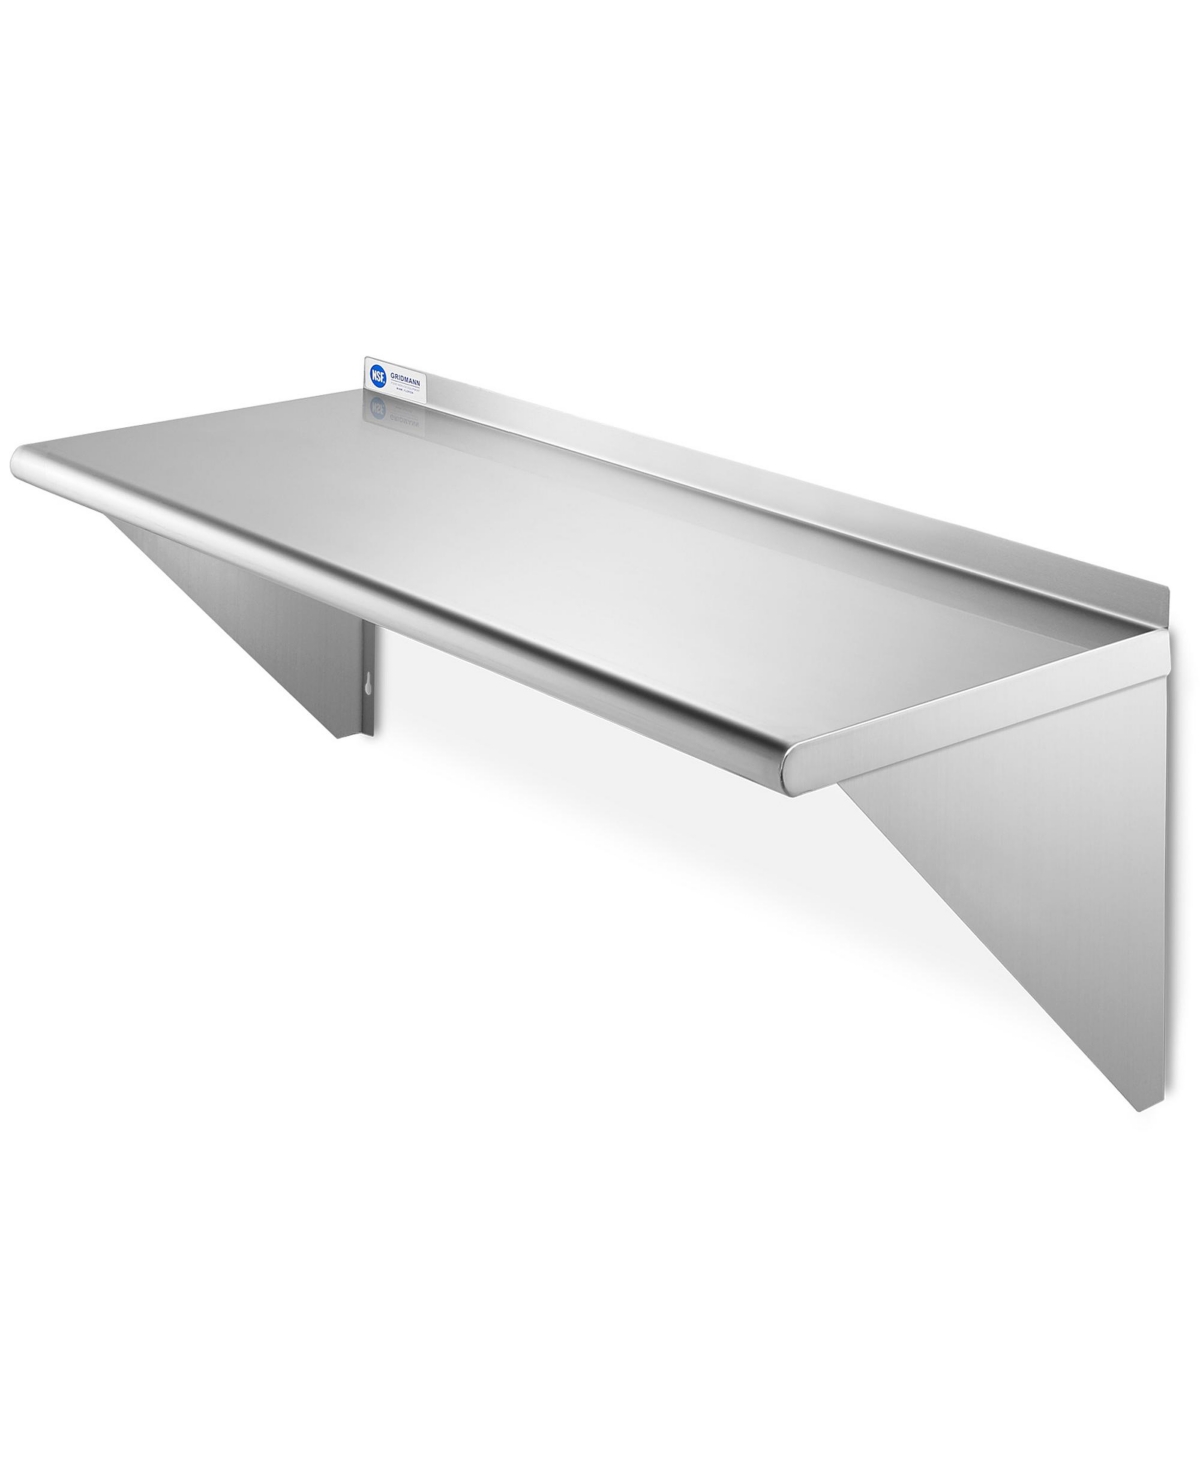 16 Gauge 18" x 48" Nsf Stainless Steel Kitchen Wall Mount Shelf w/ Backsplash - Silver